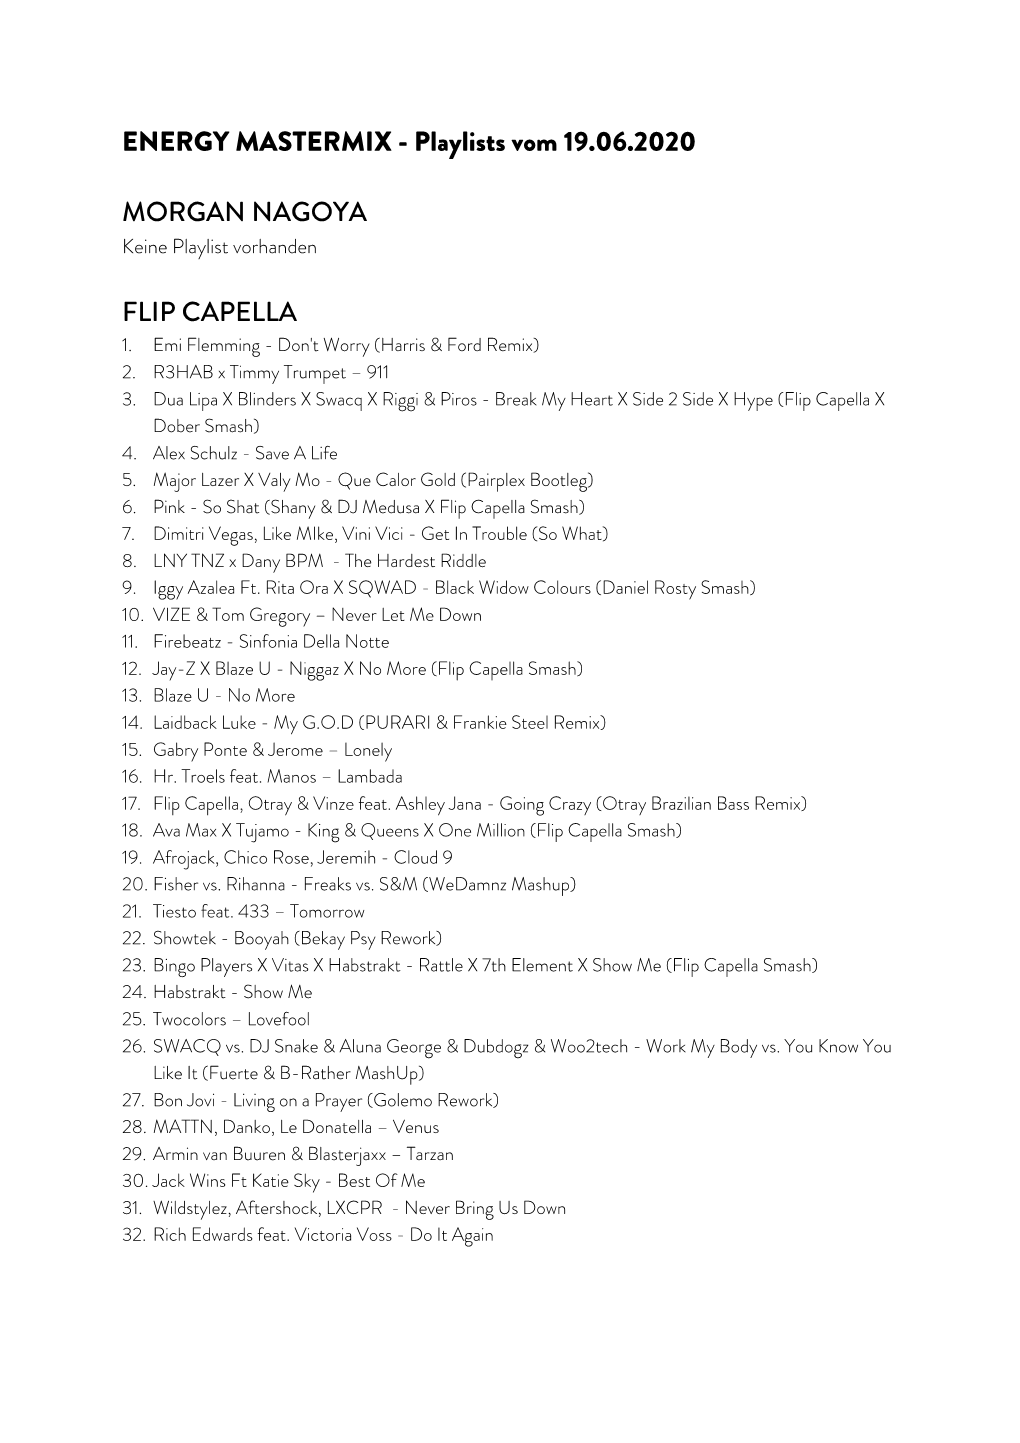 Playlists Vom 19.06.2020 MORGAN NAGOYA FLIP CAPELLA